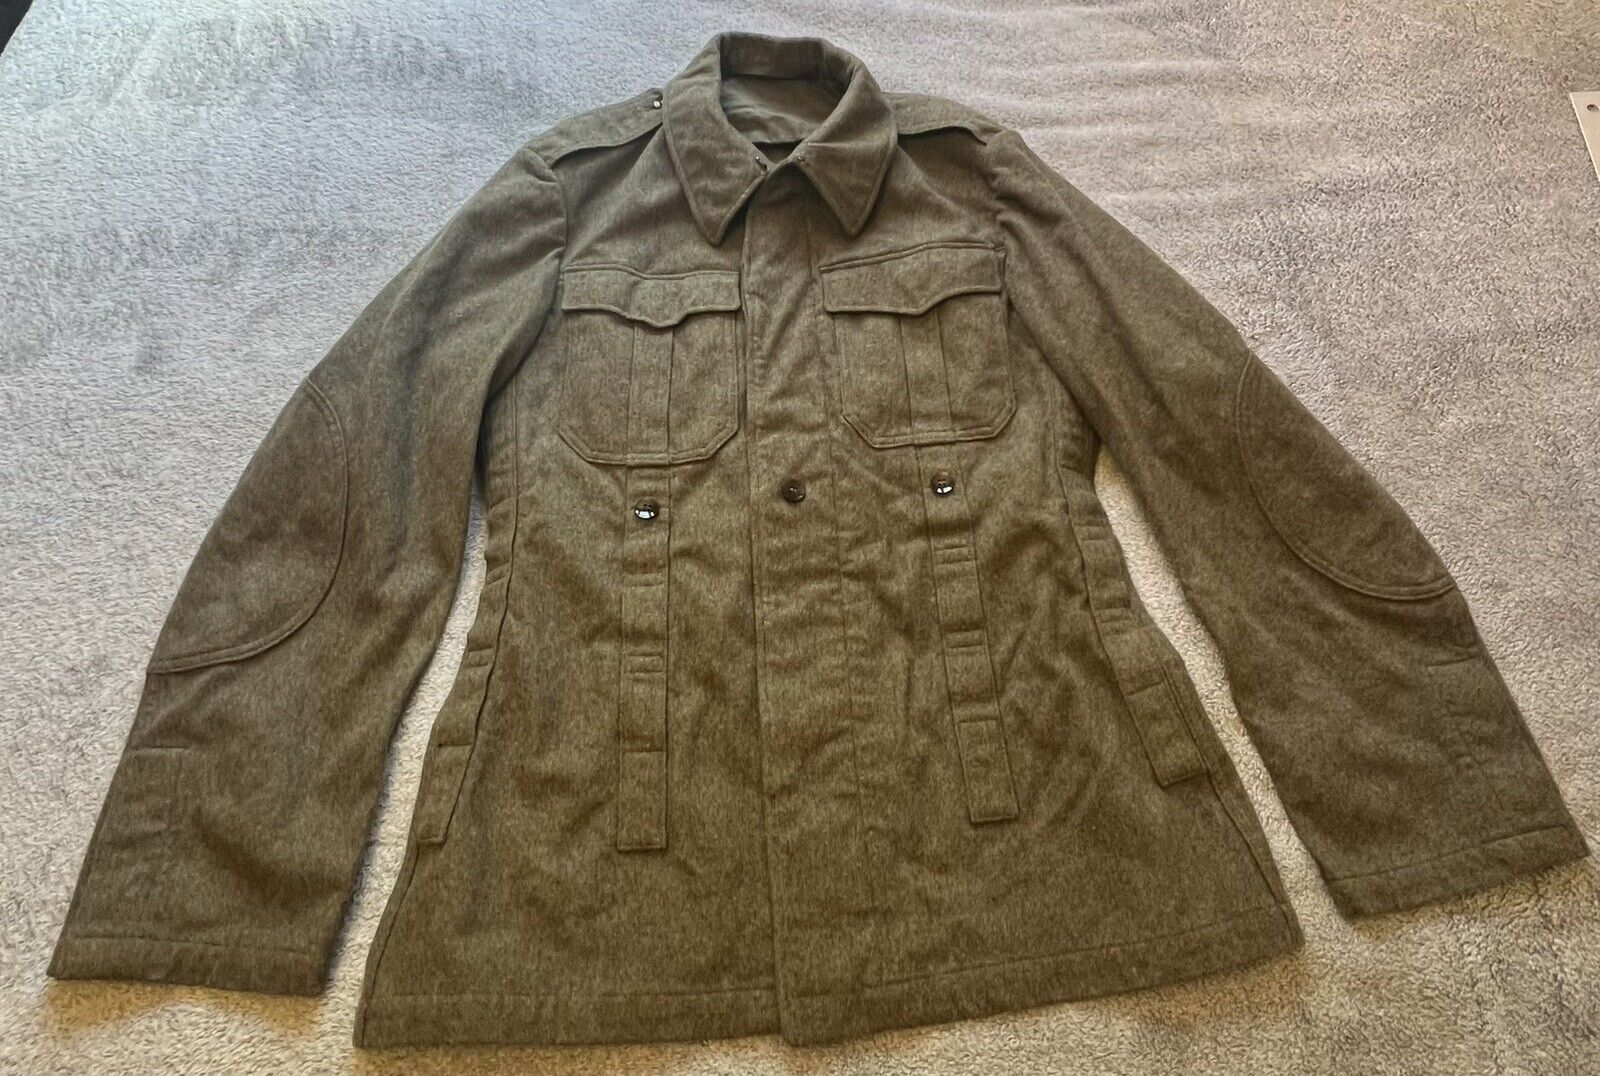 HCH Muermann KG Linden German Military Coat Wool 38” Chest x 26 1/2” Long Green